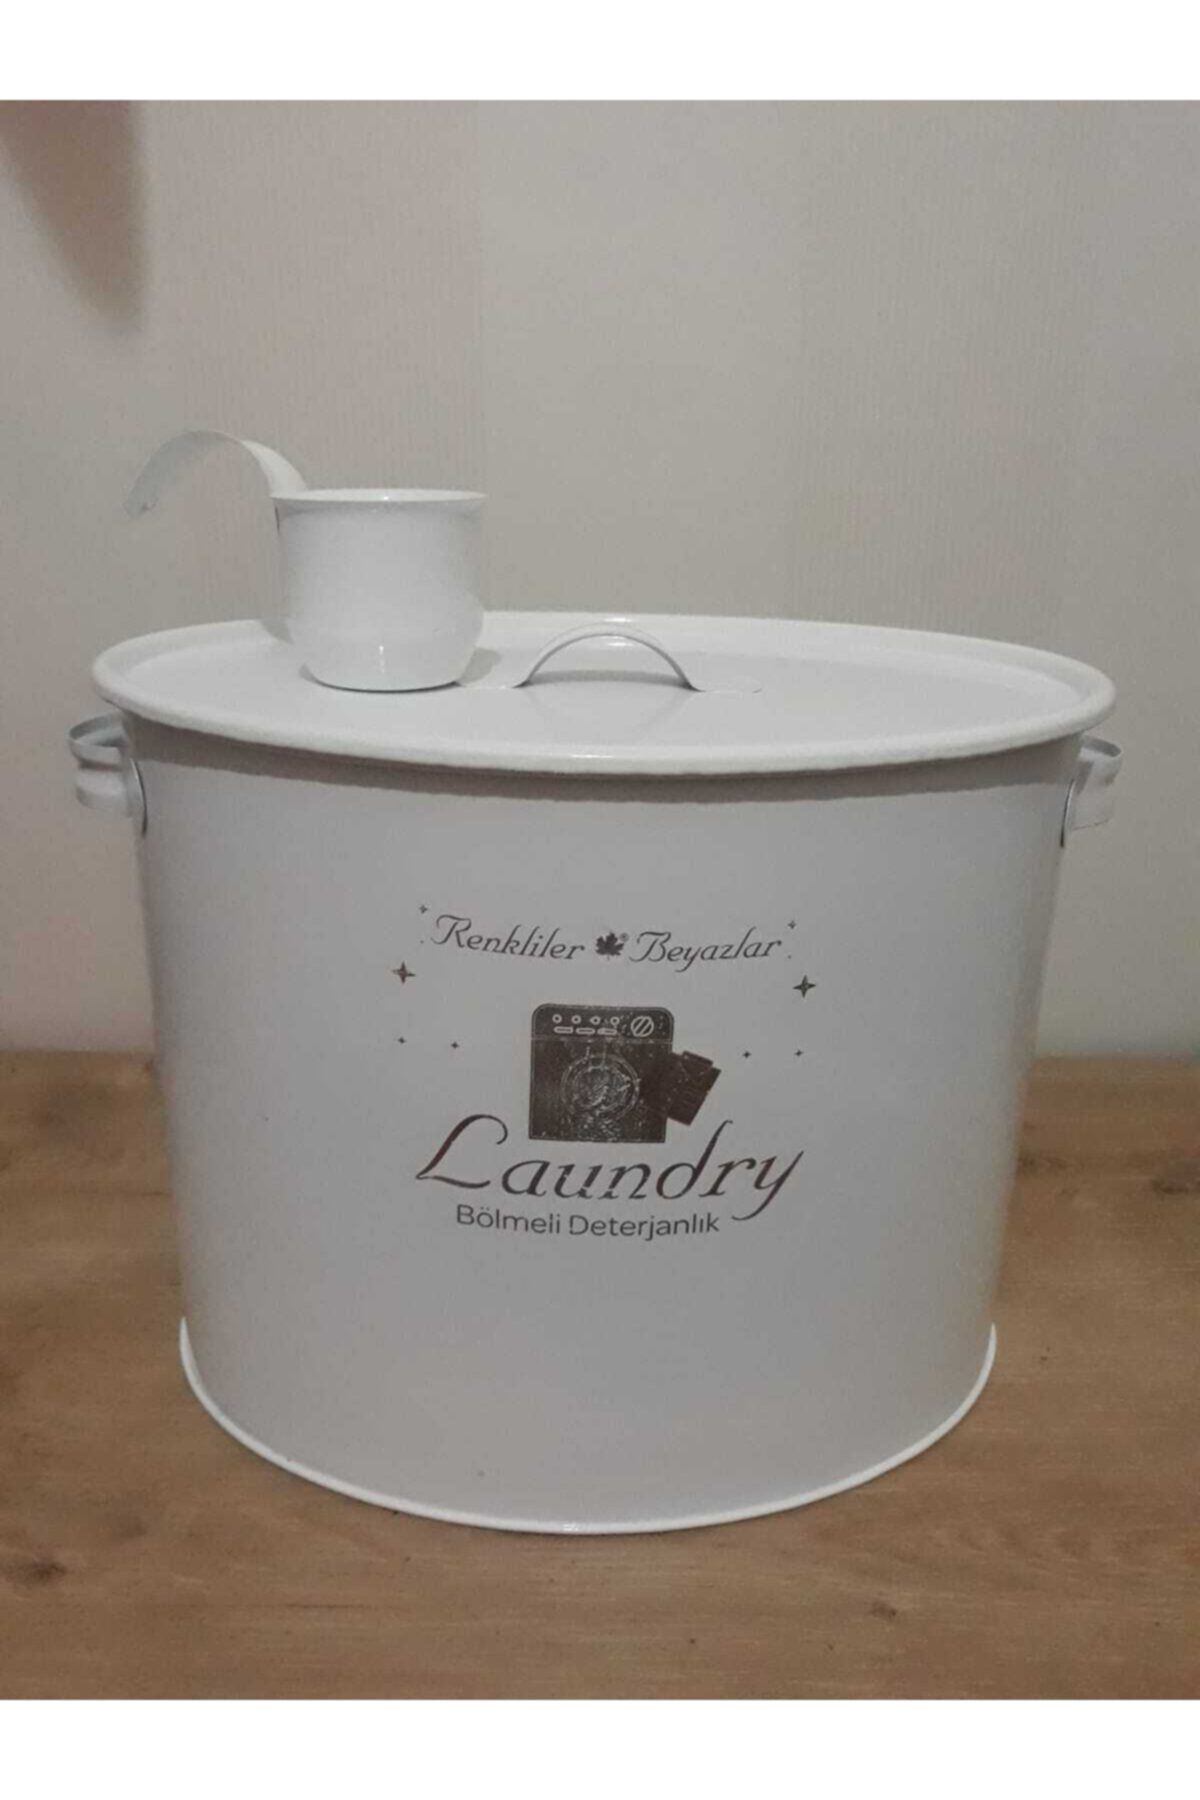 Laundry Beyaz Metal Bölmeli Deterjan Kutusu